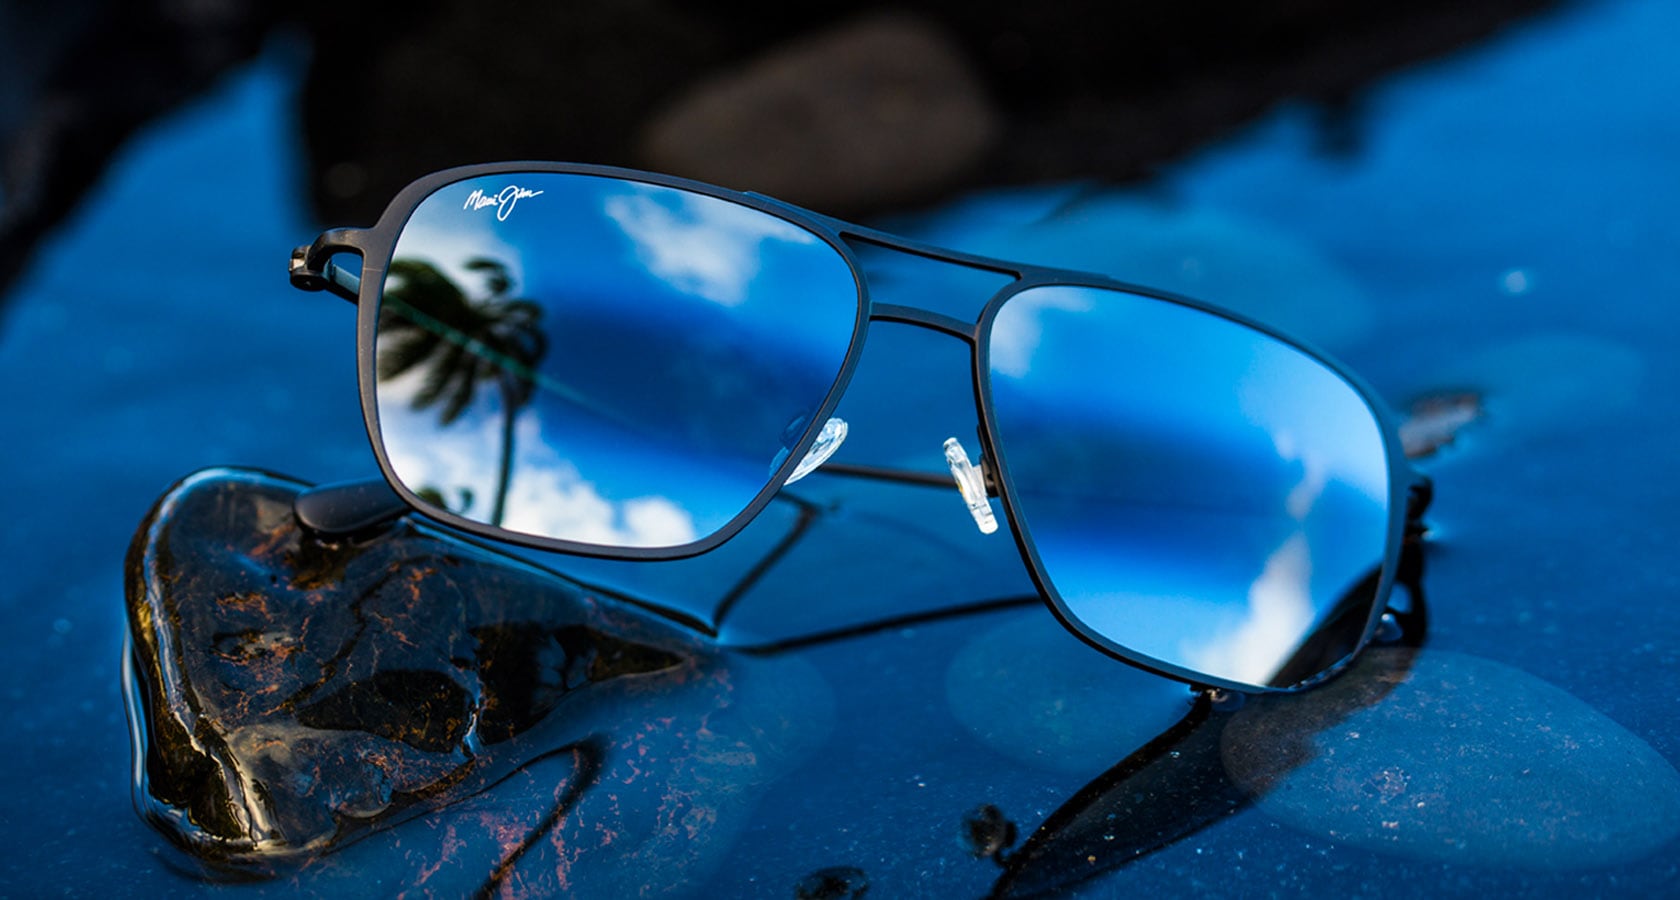 black matte titanium sunglasses displayed in water with rocks